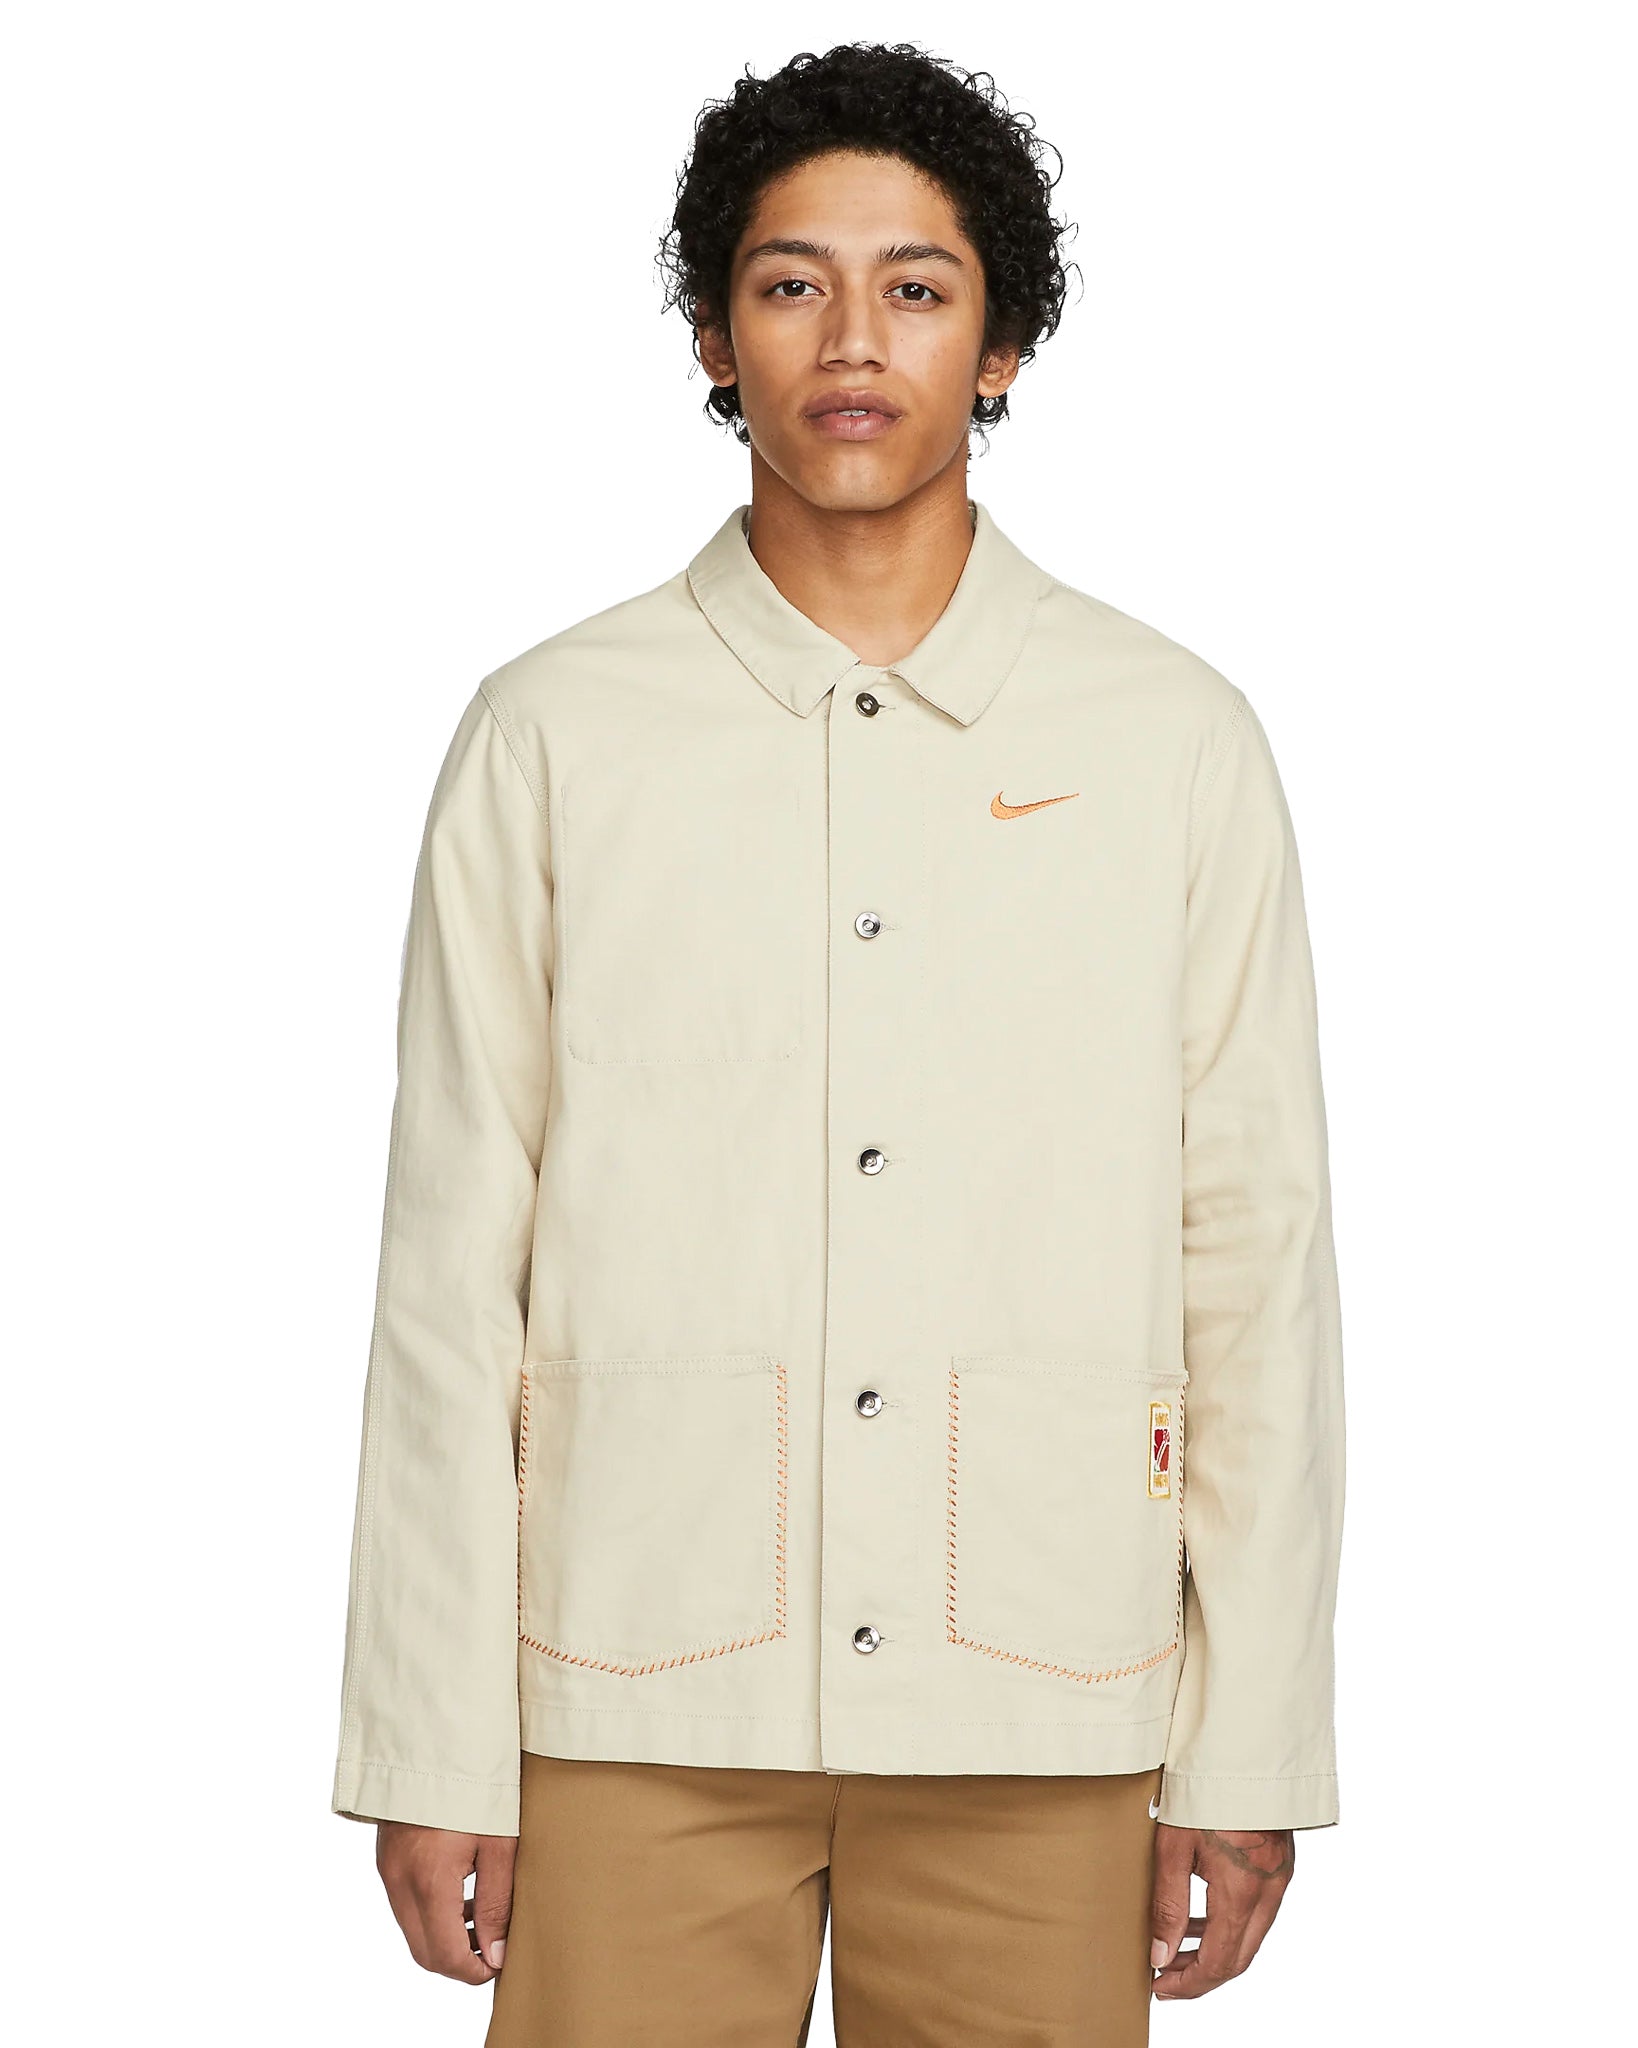 Nike Sportswear Somos Familia Coat Jacket "Rattan"